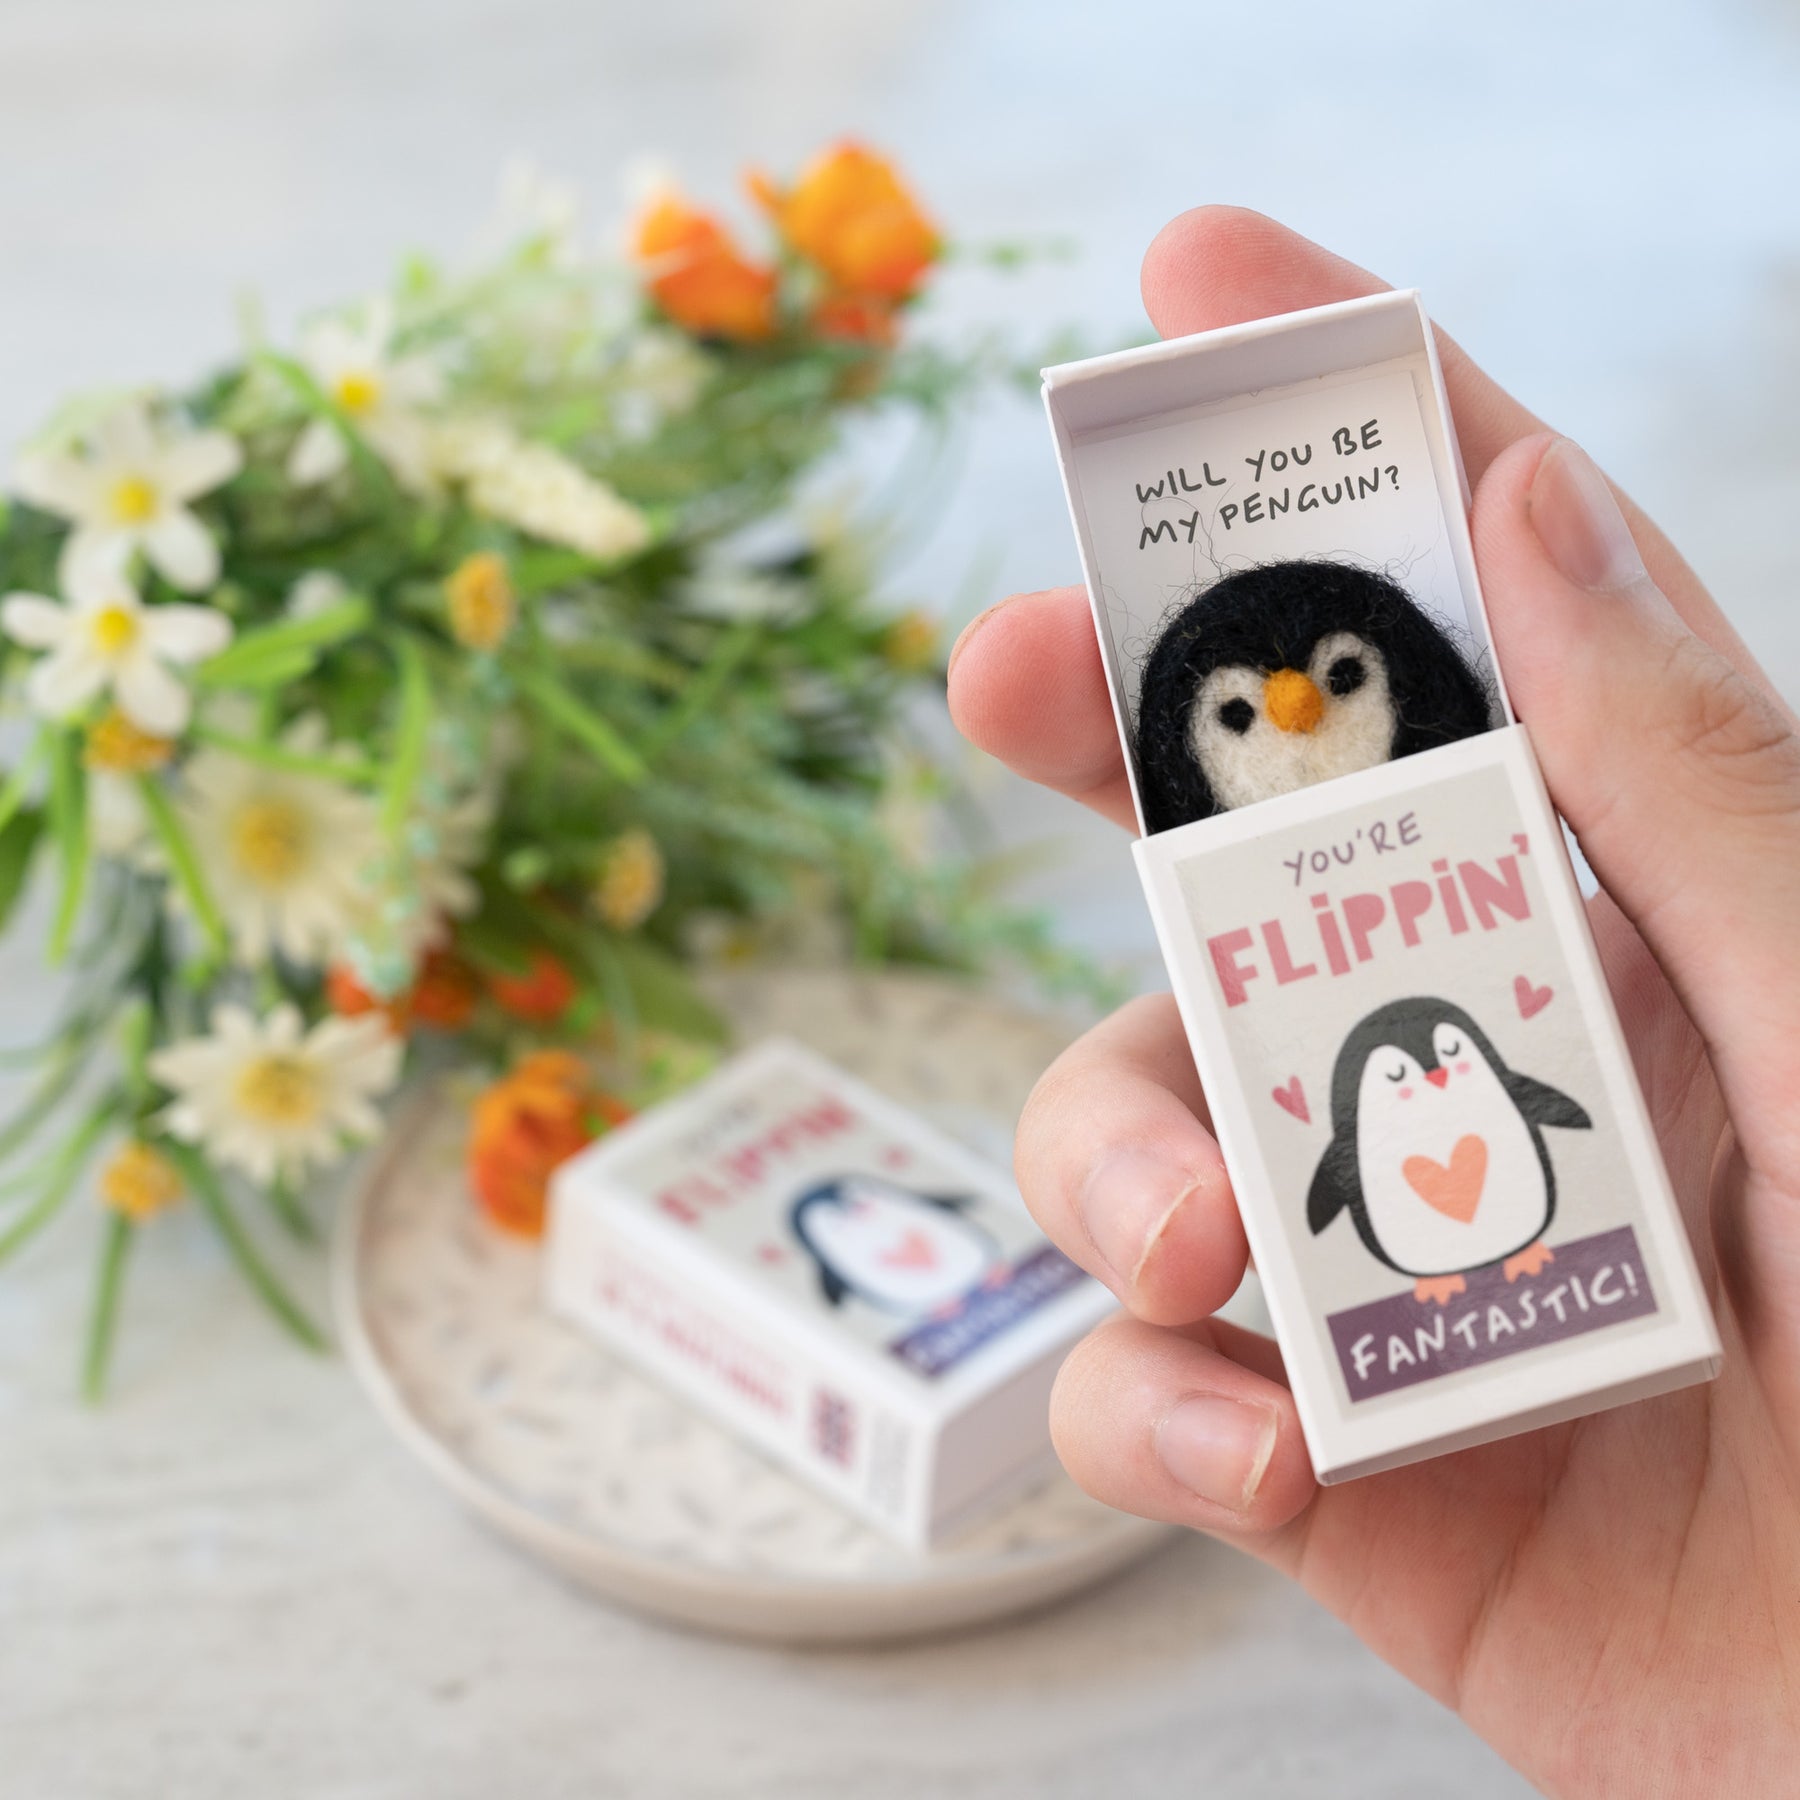 You're Flippin' Fantastic Wool Felt Penguin